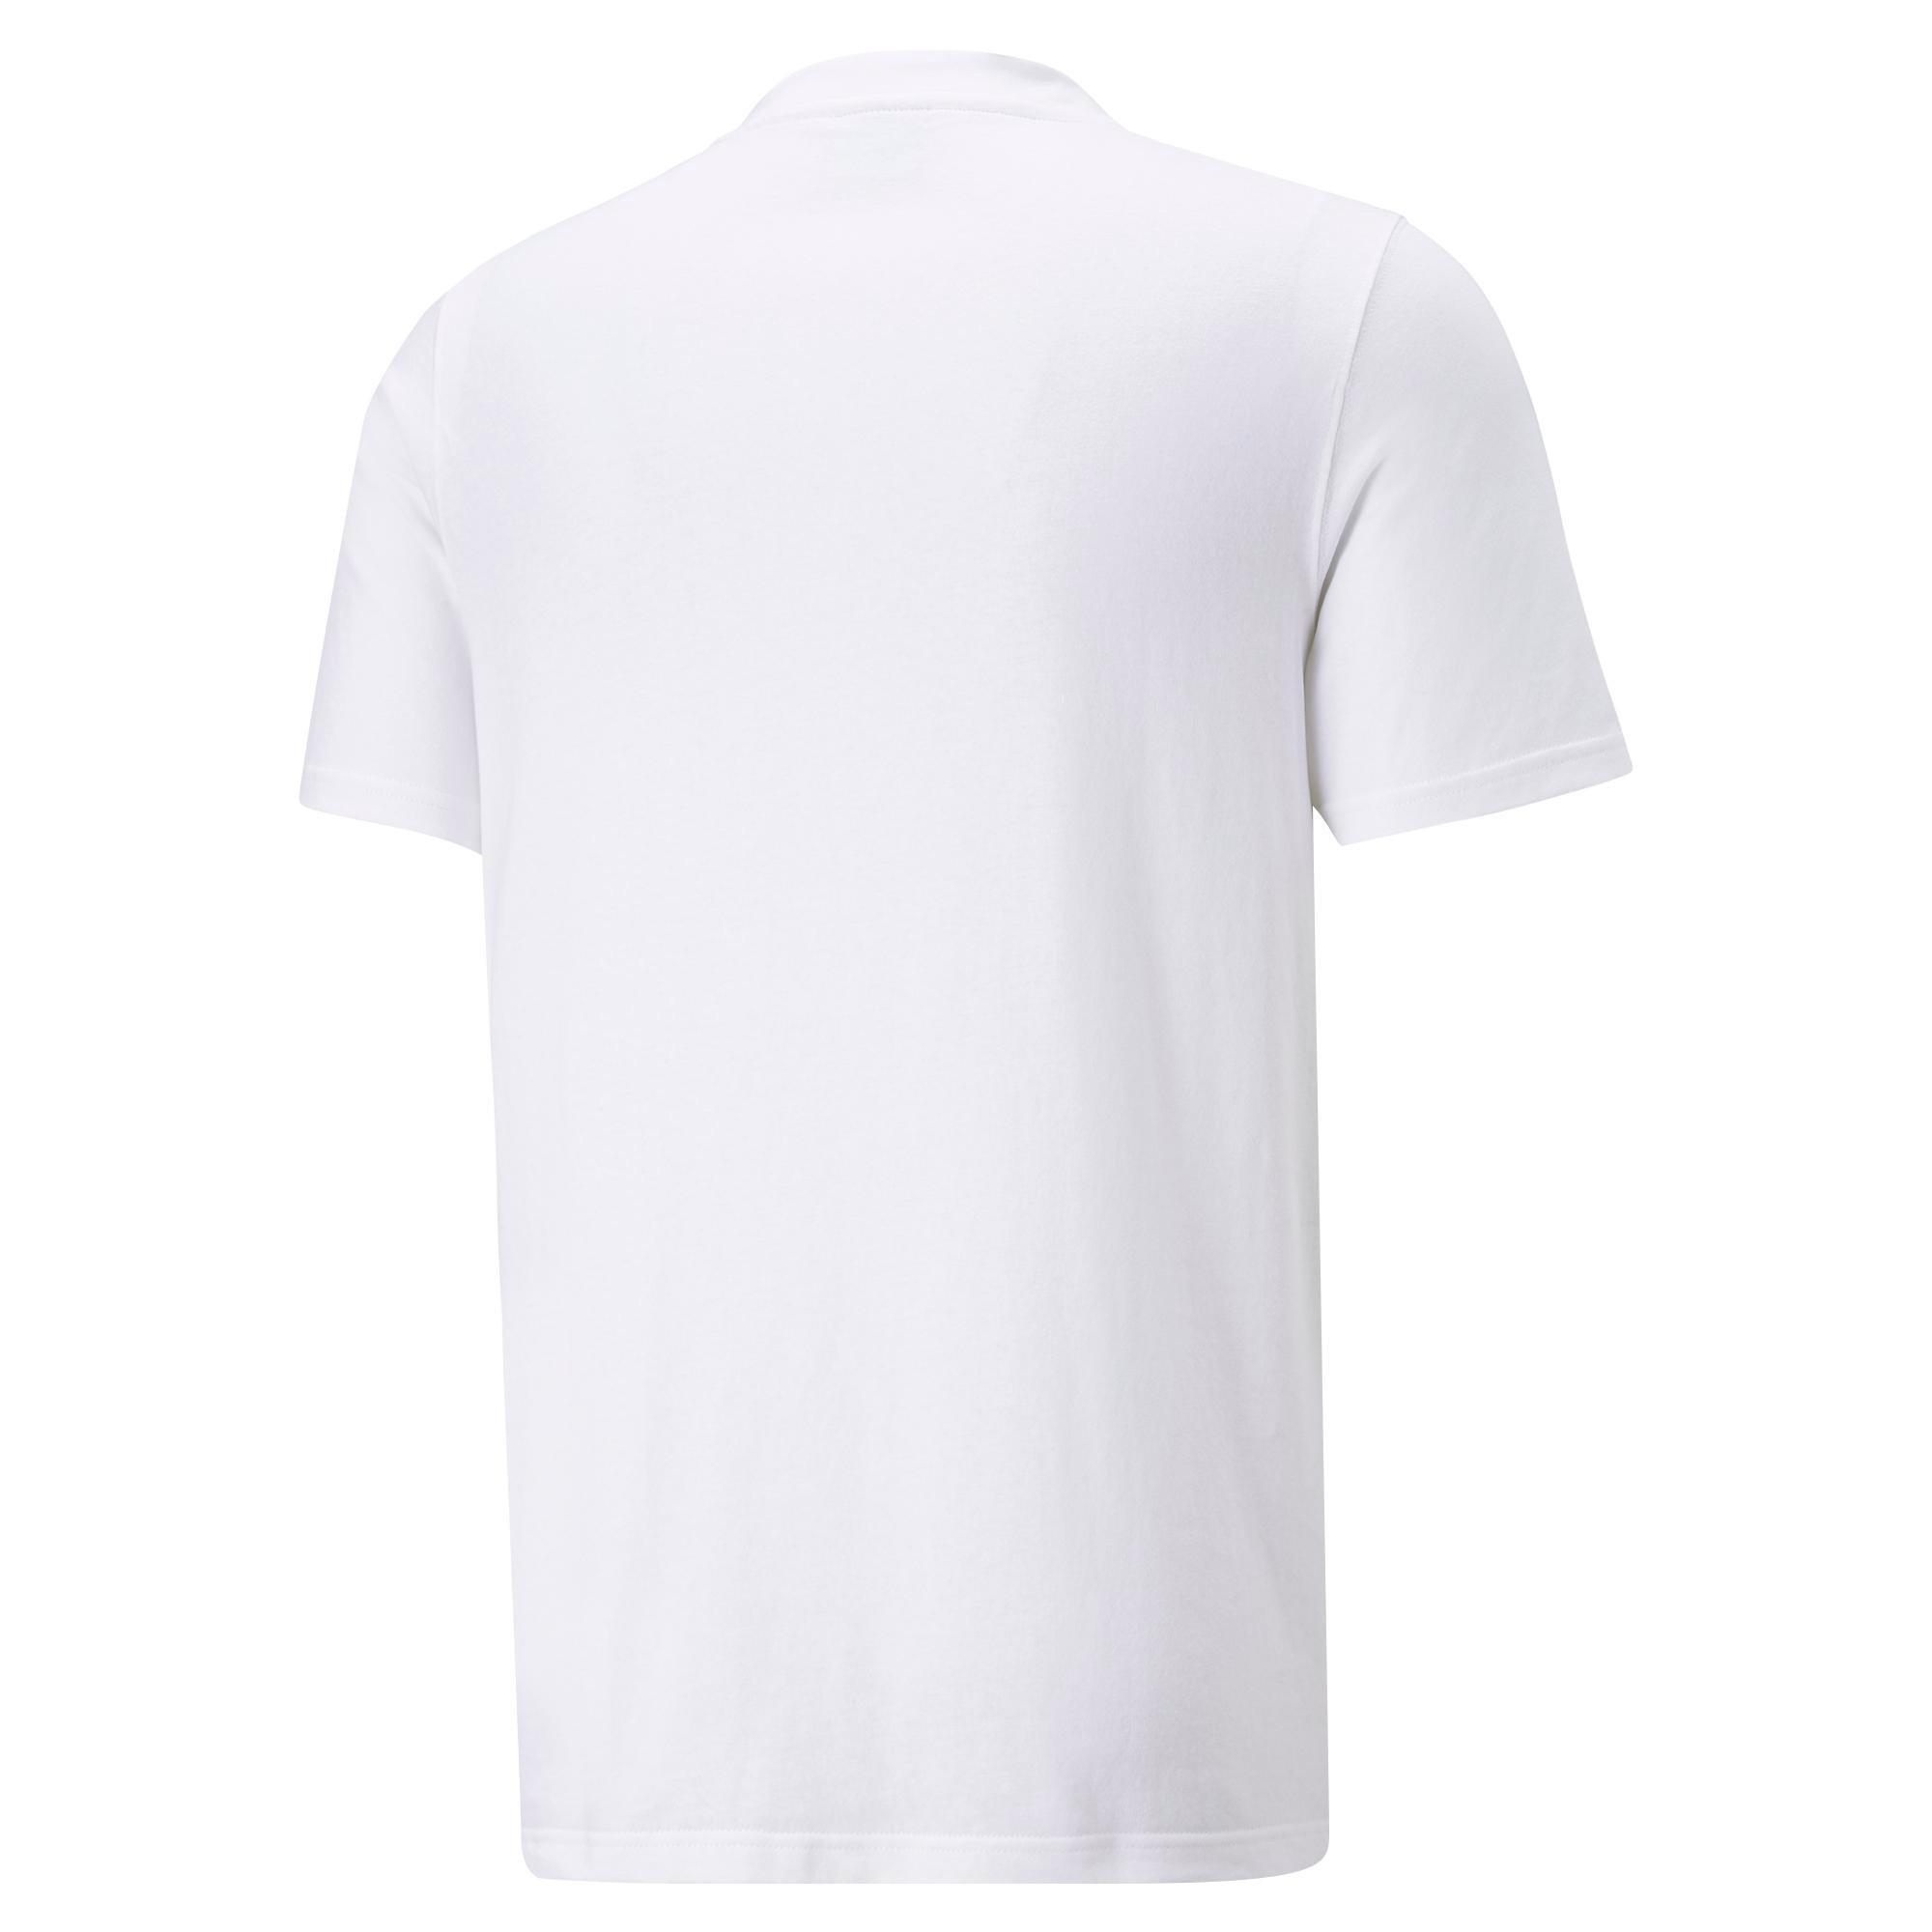 Fandom Graphic T-Shirt, White, large image number 1